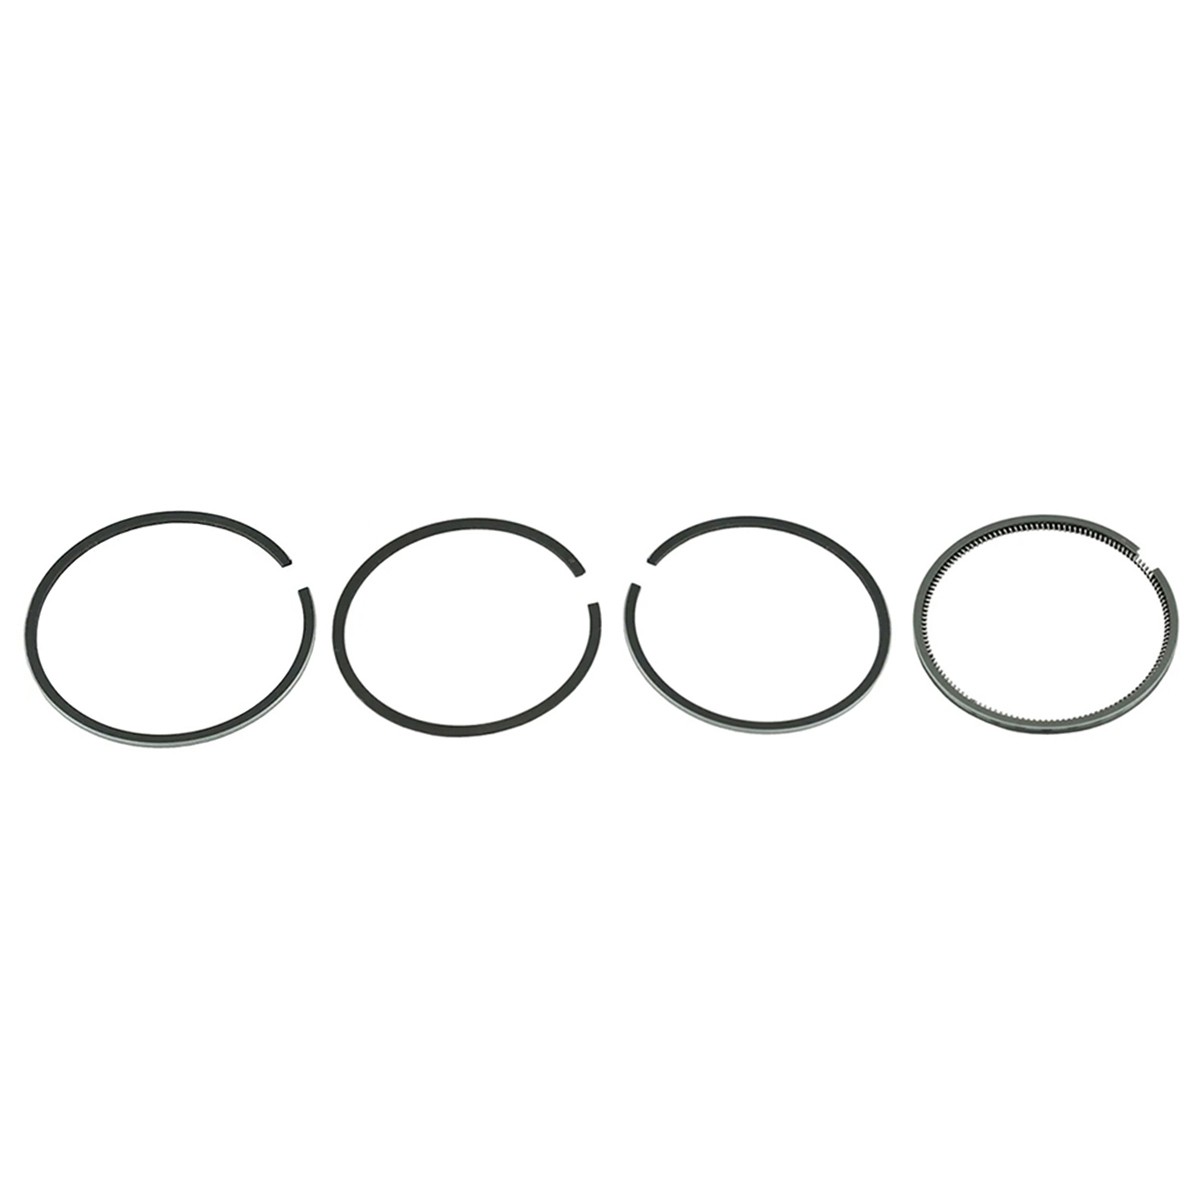 Piestne krúžky / Ø 95 mm / 2,50 x 2,00 x 2,00 x 4,50 mm / Toyosha S135 / Hinomoto E25/E250 / 2701-3110-000 / 7-26-100-05